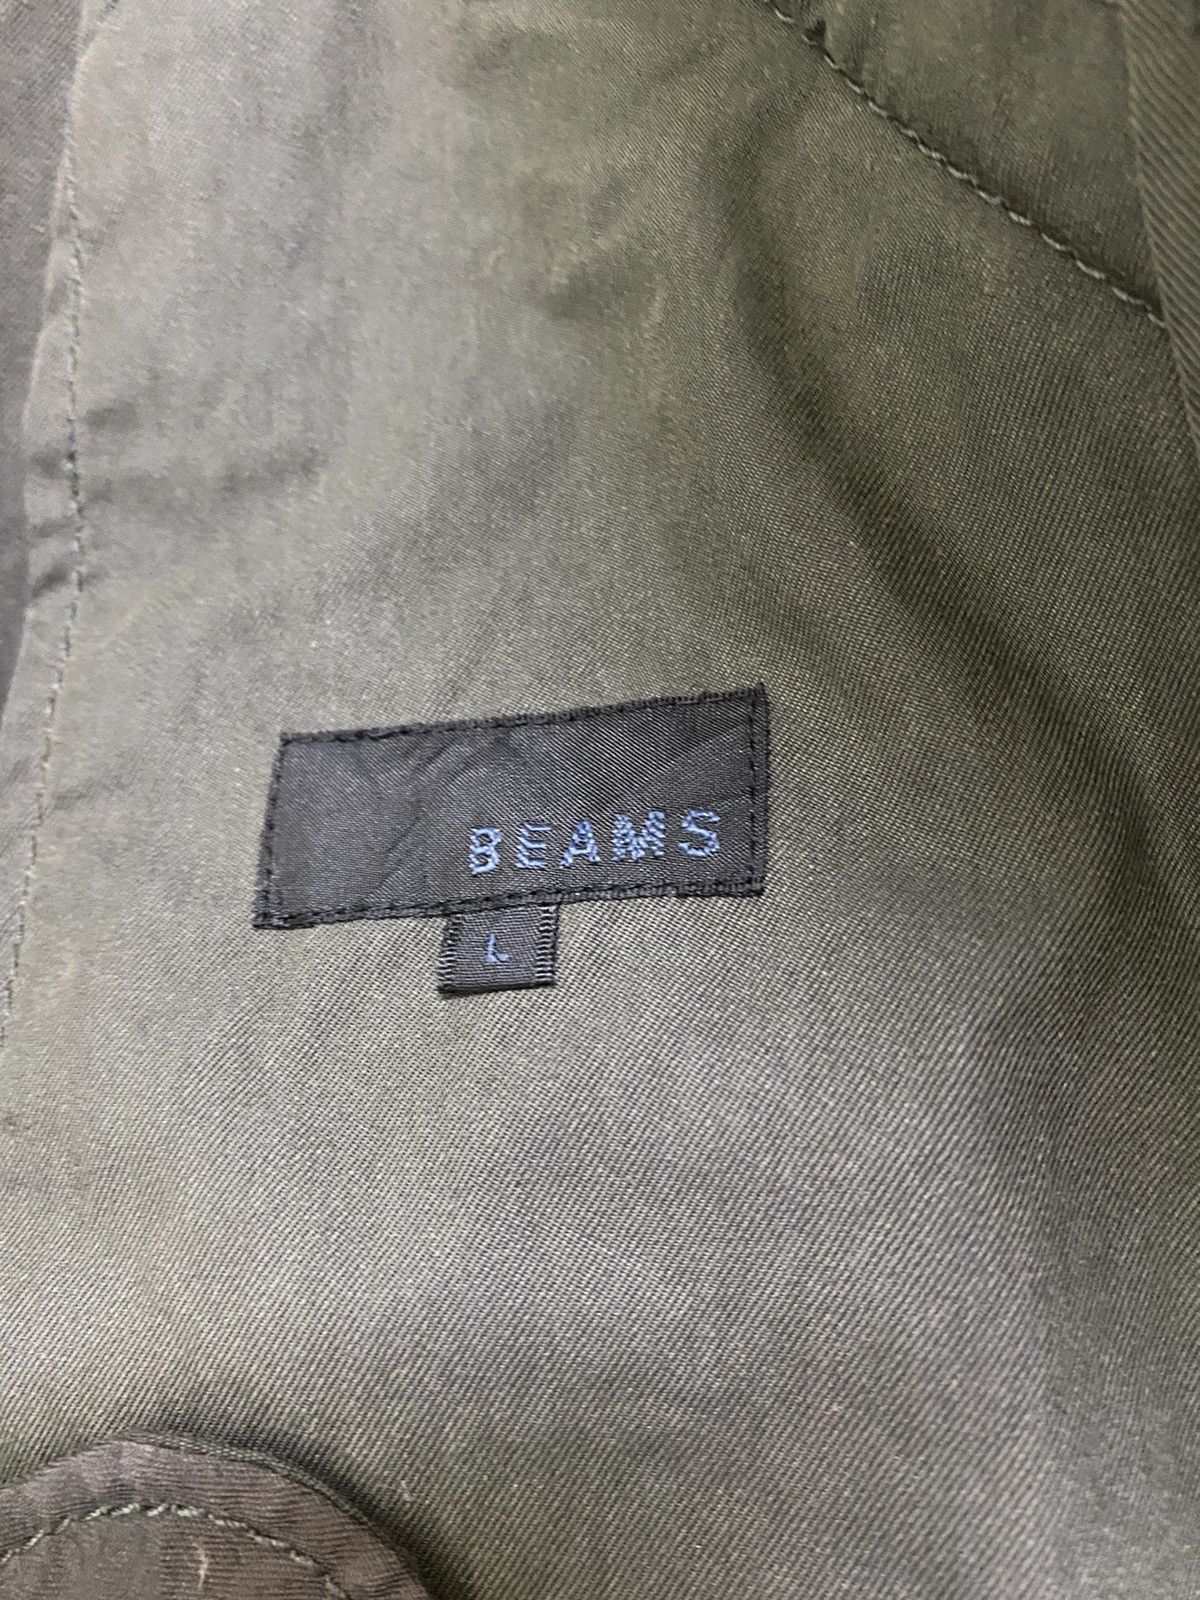 Beams Zipper Jacket High Collar Design Military Design - 3